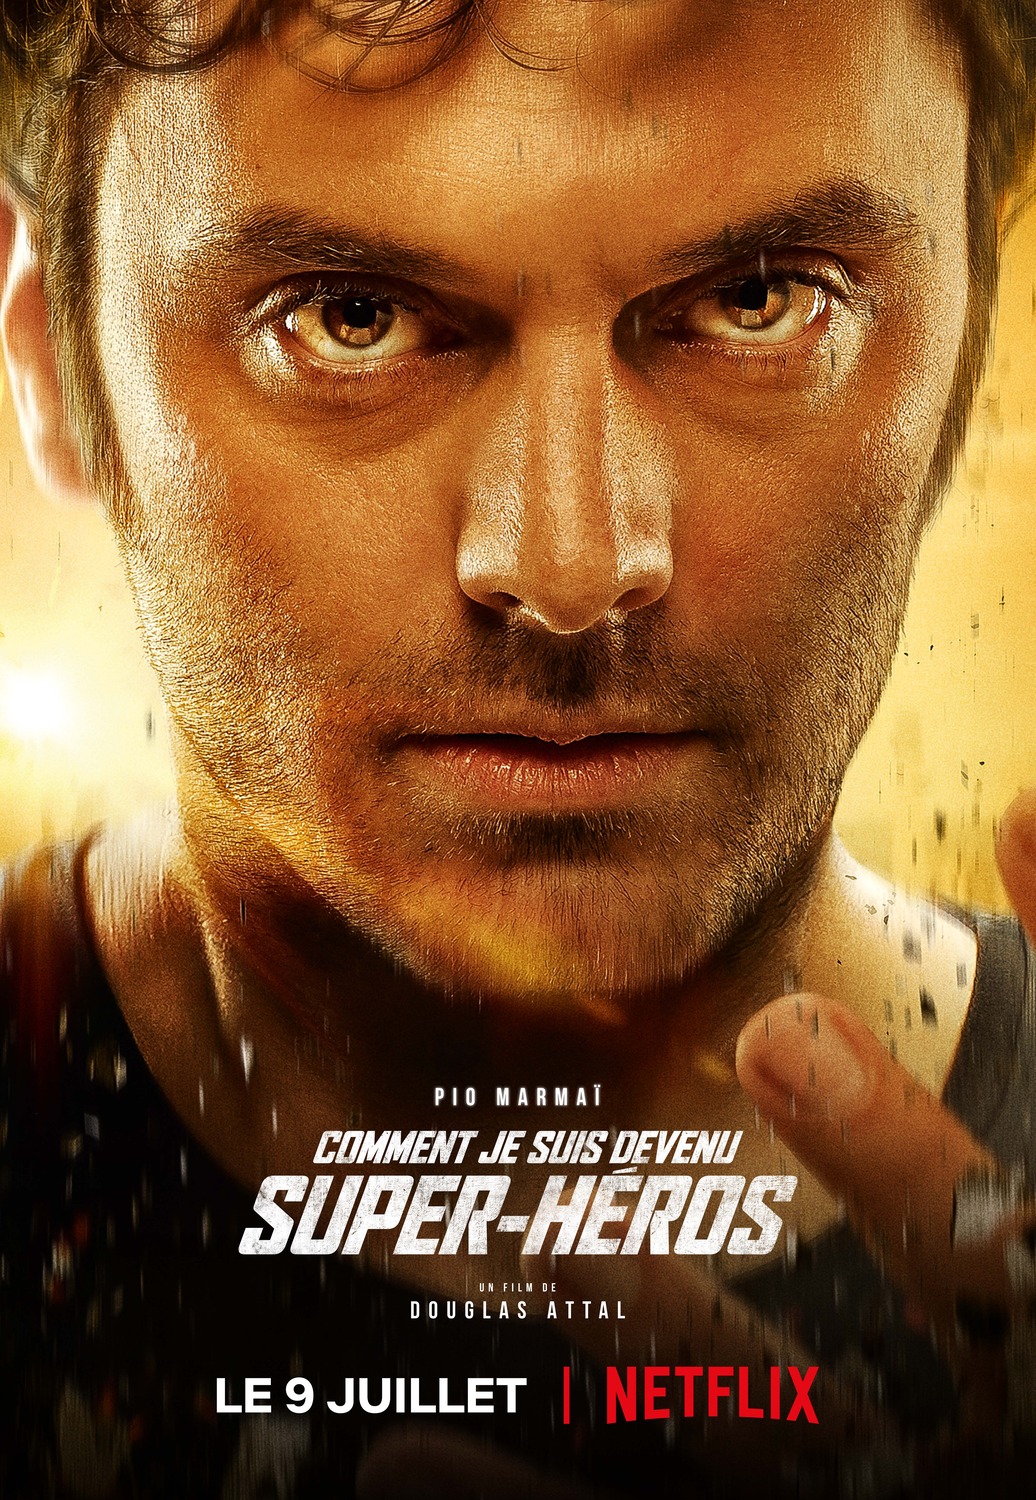 Extra Large Movie Poster Image for Comment je suis devenu super-héros (#10 of 12)